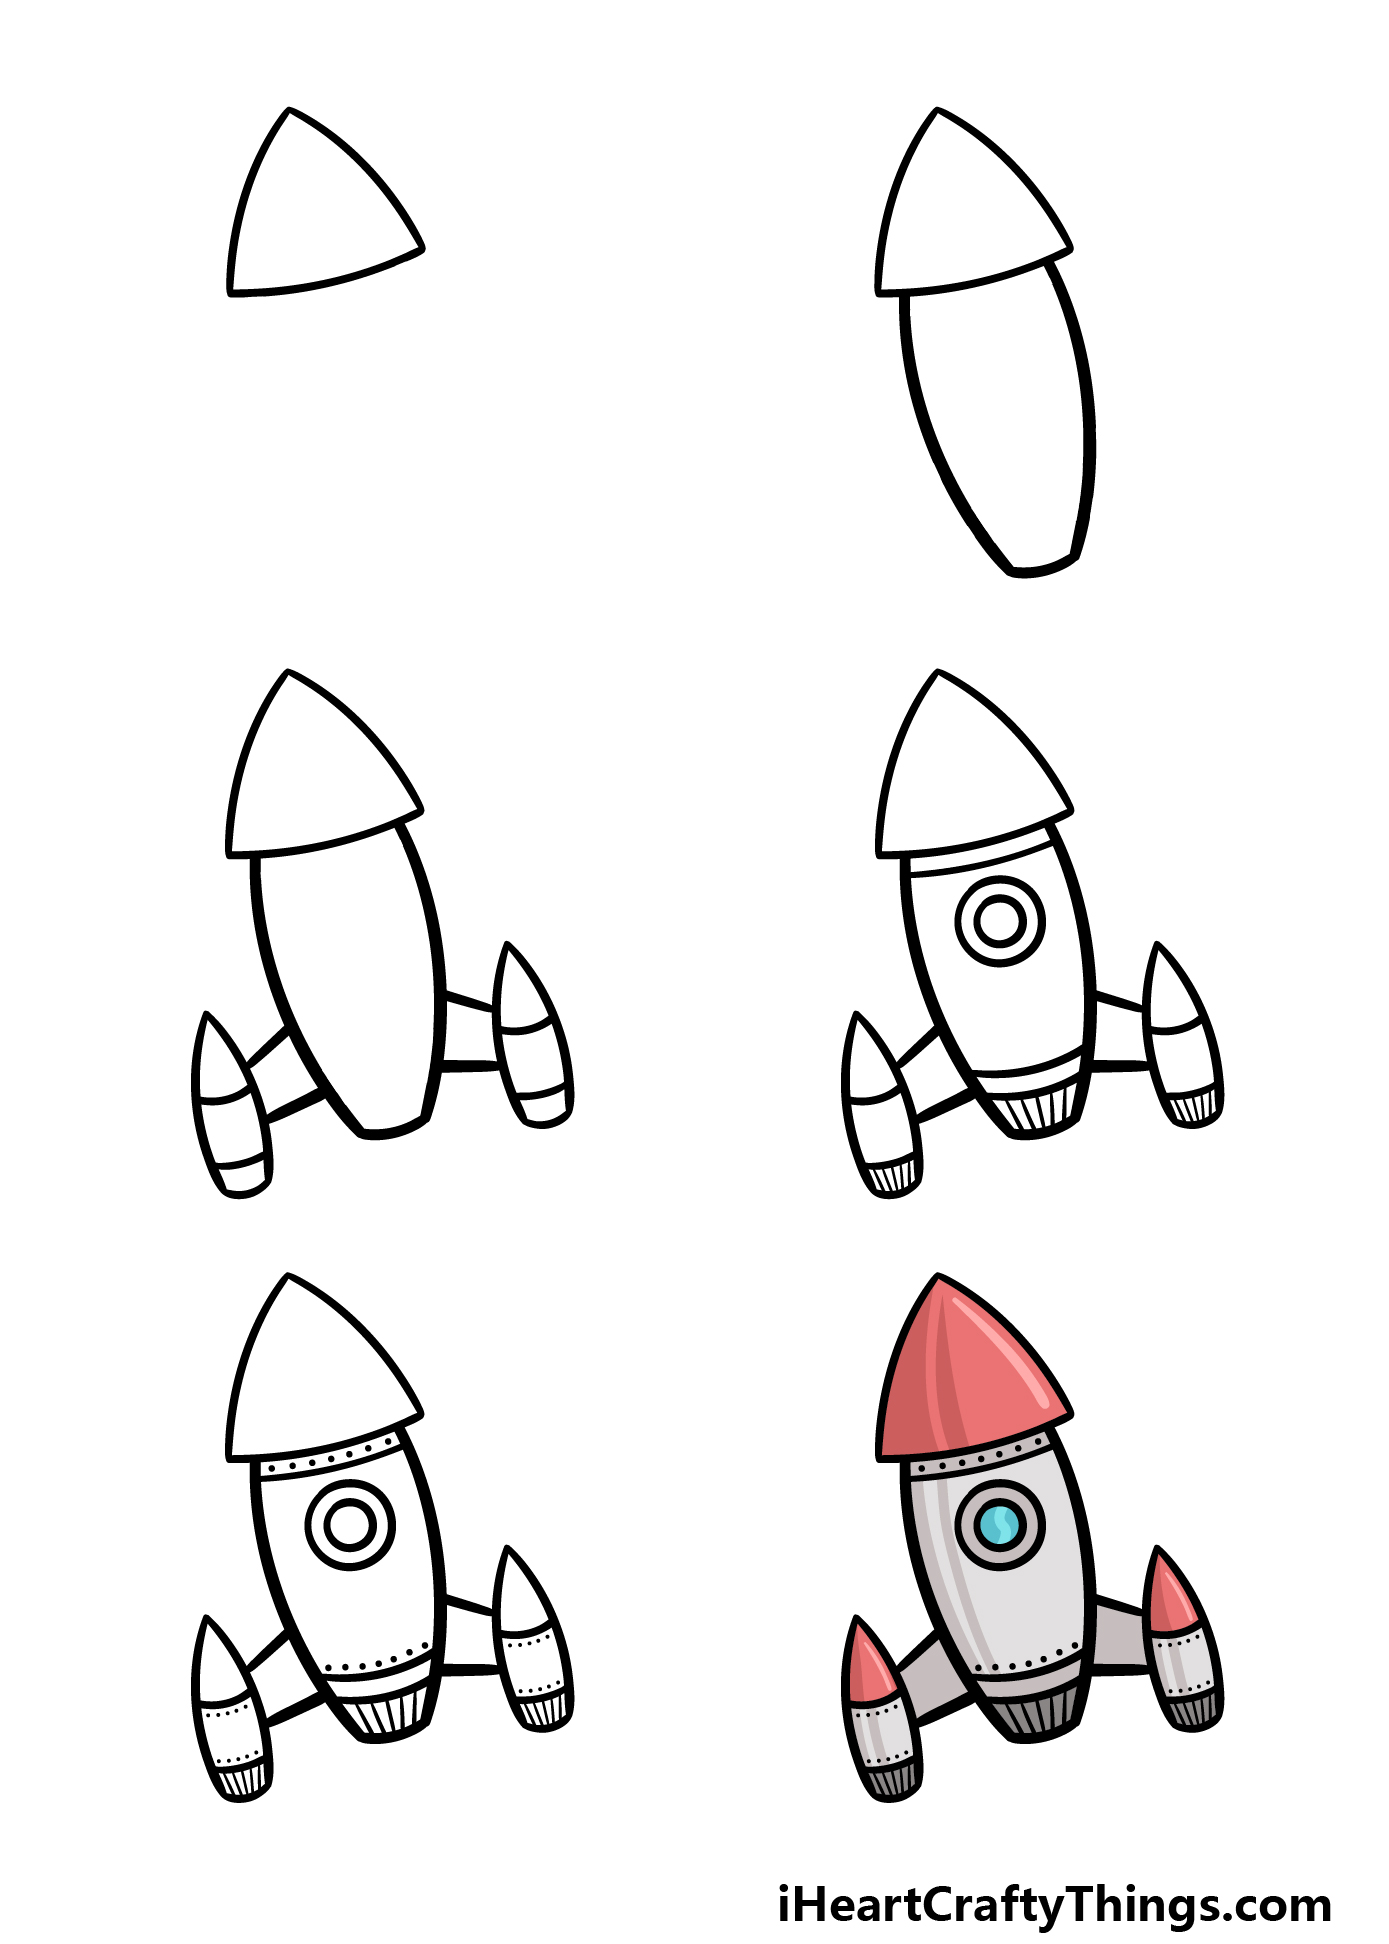 Cartoon Rocket Drawing - How To Draw A Cartoon Rocket Step By Step